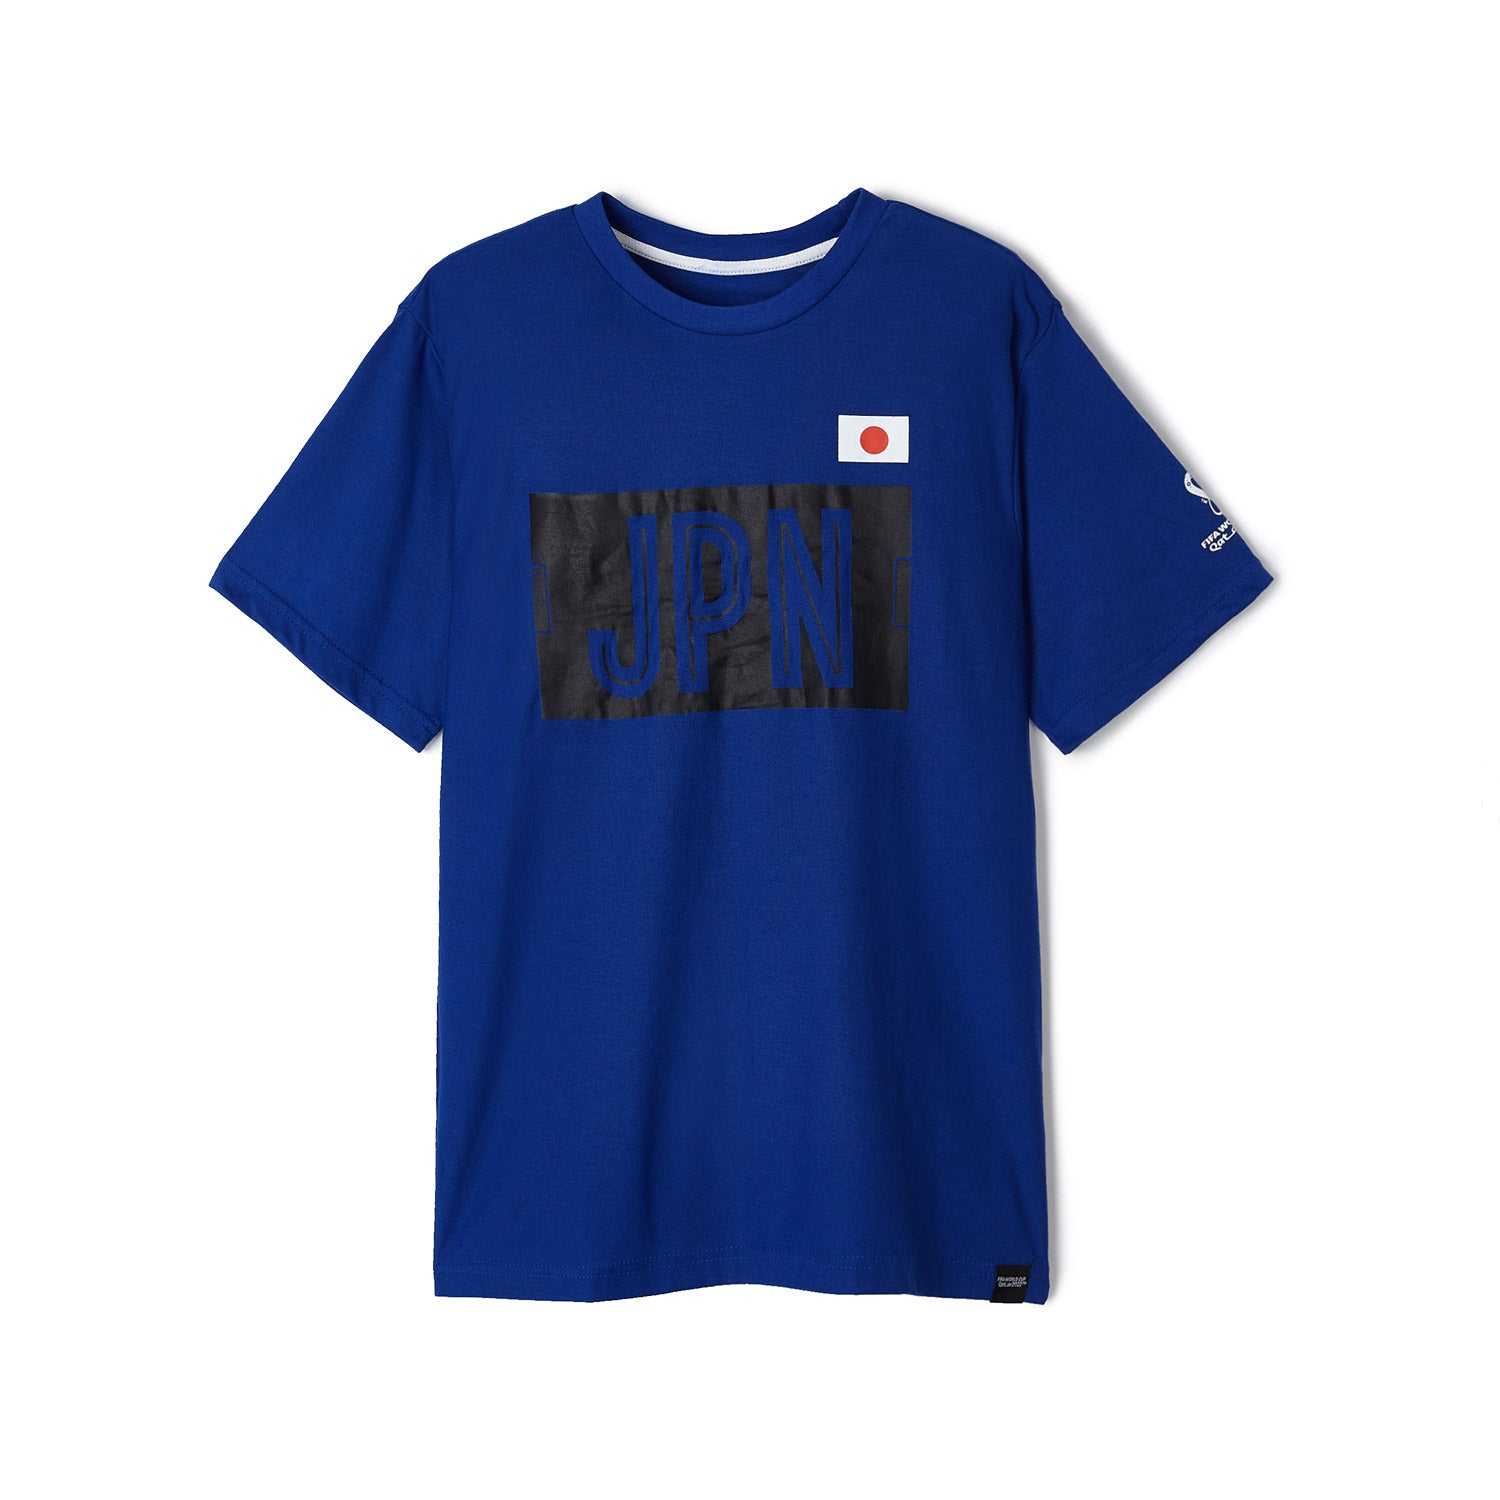 2022 World Cup Japan Blue T-Shirt - Mens